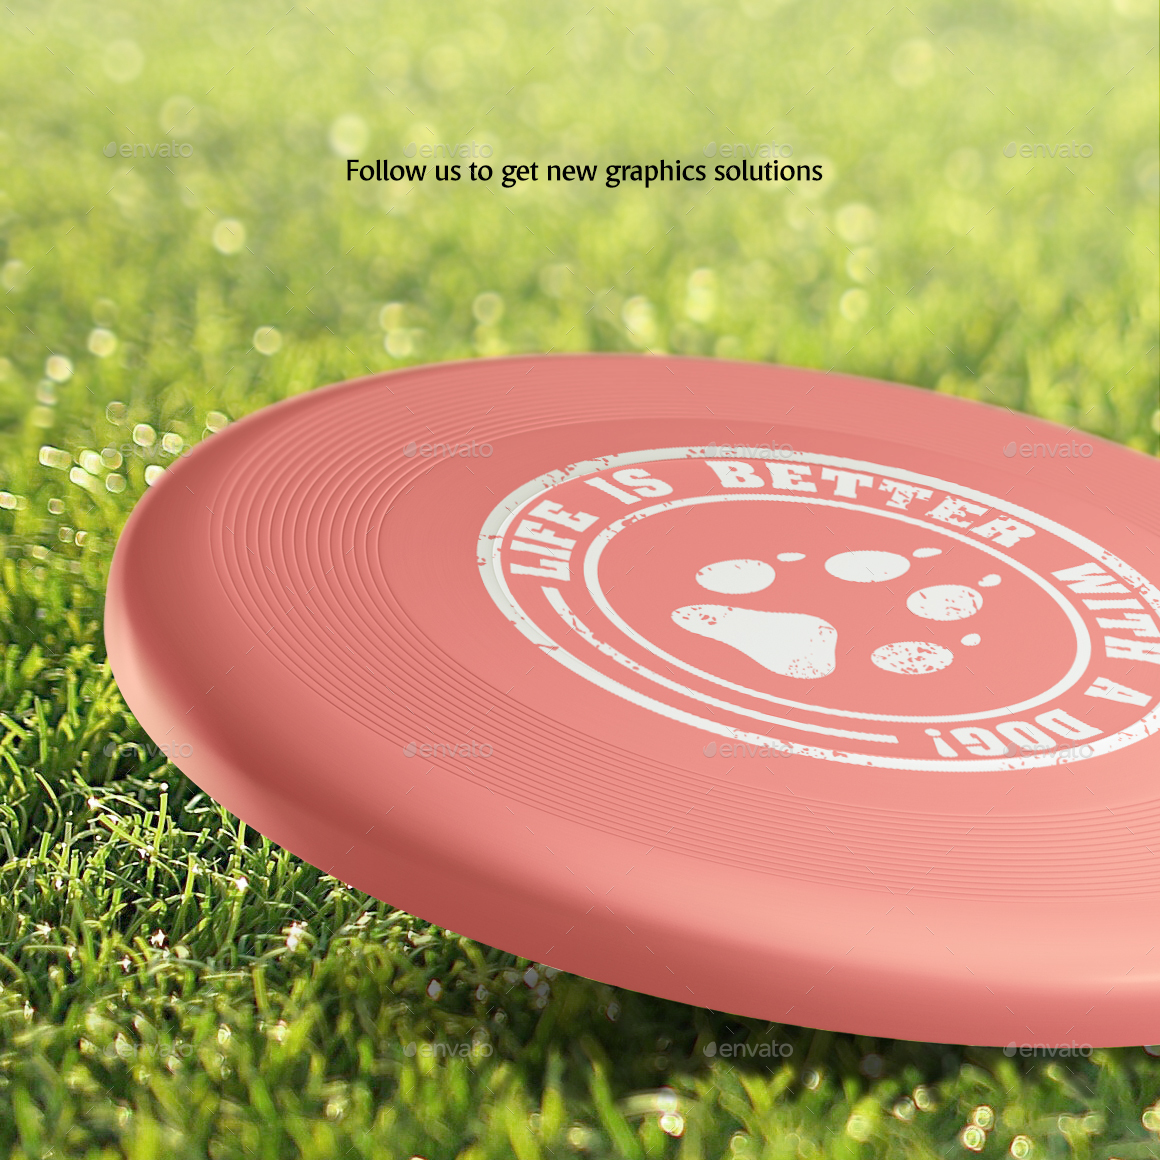 Download Frisbee Mockups Set by rebrandy | GraphicRiver